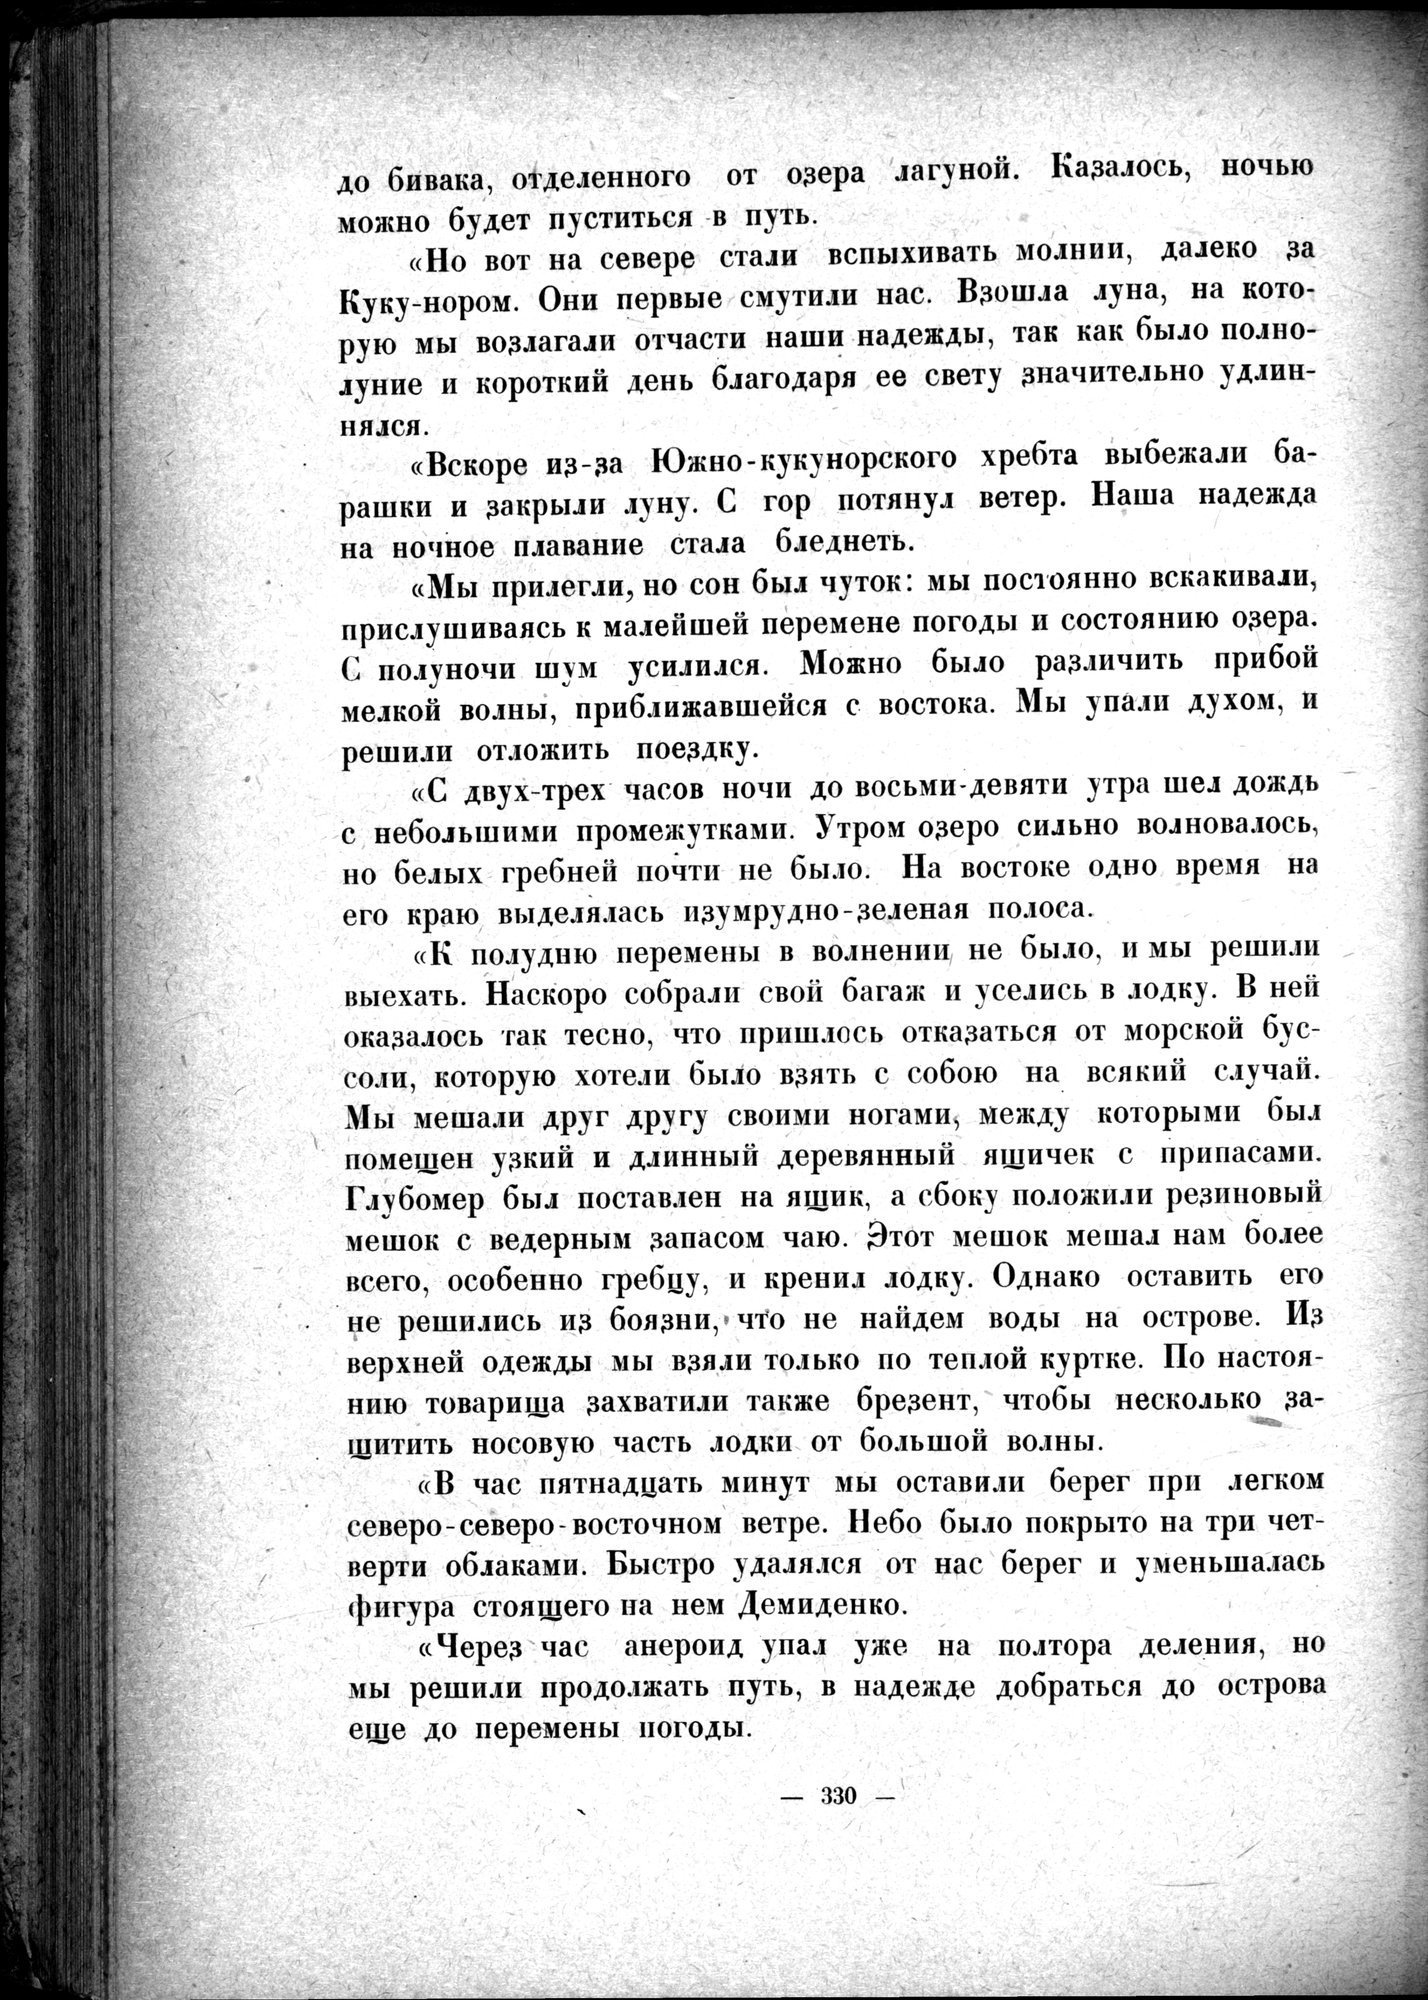 Mongoliya i Amdo i mertby gorod Khara-Khoto : vol.1 / Page 380 (Grayscale High Resolution Image)